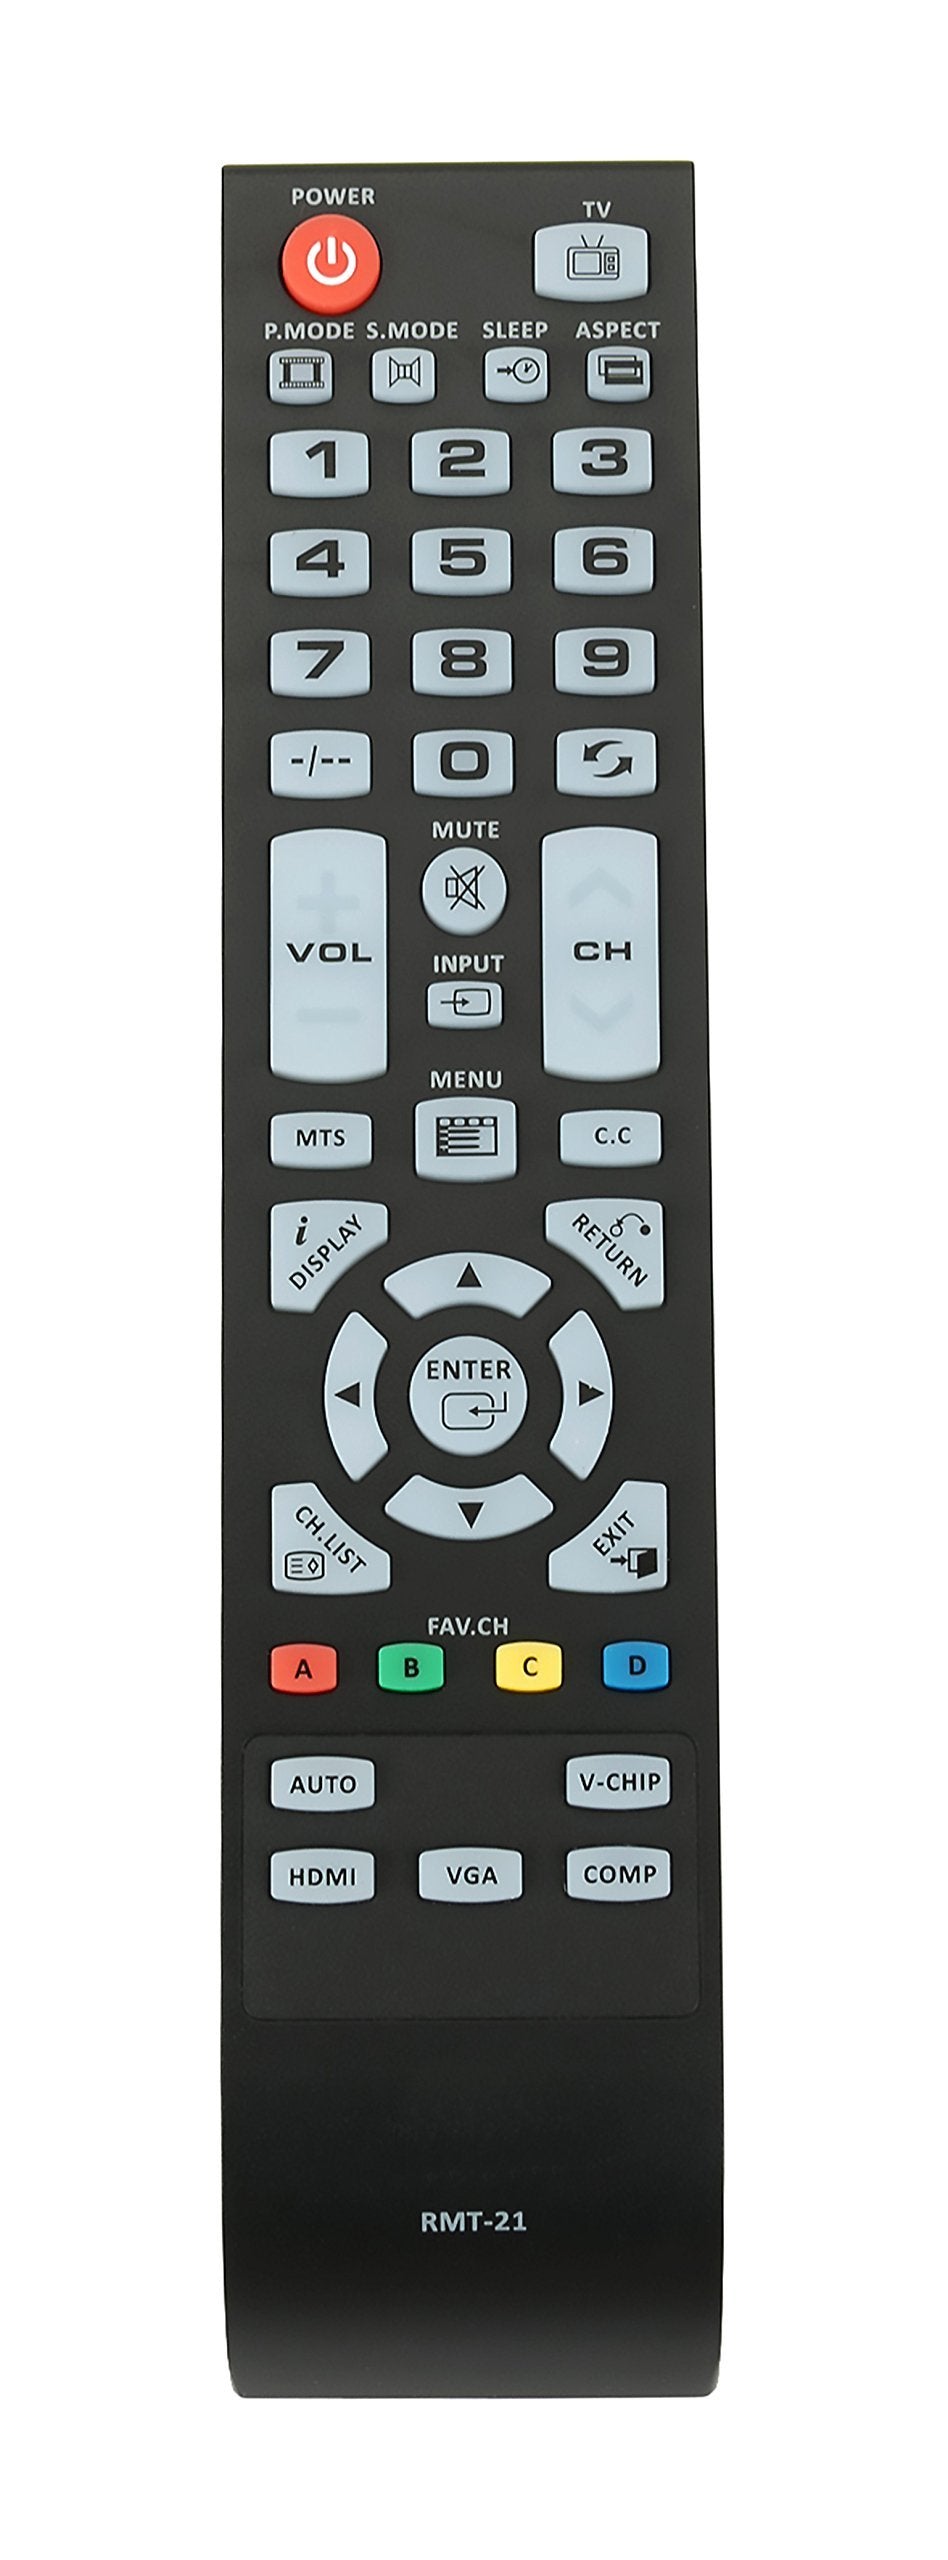 RMT-21 Remote Control fit for Westinghouse TV CW50T9YW CW40T8GW CW40T6DW CW40T6DW CW40T2RW CW40T6DW CW40T8GW